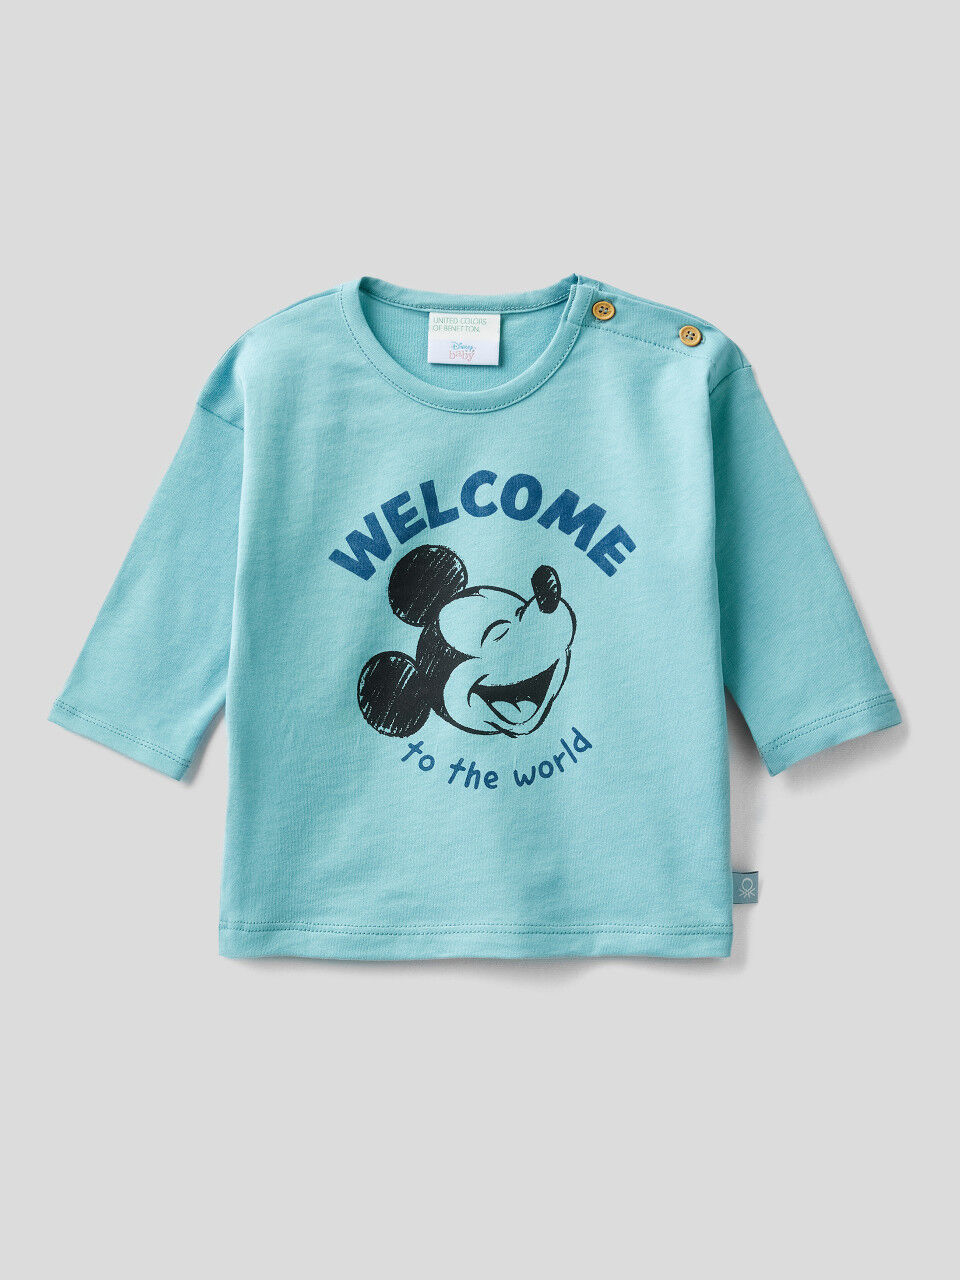 Mickey & Friends t-shirt in warm cotton